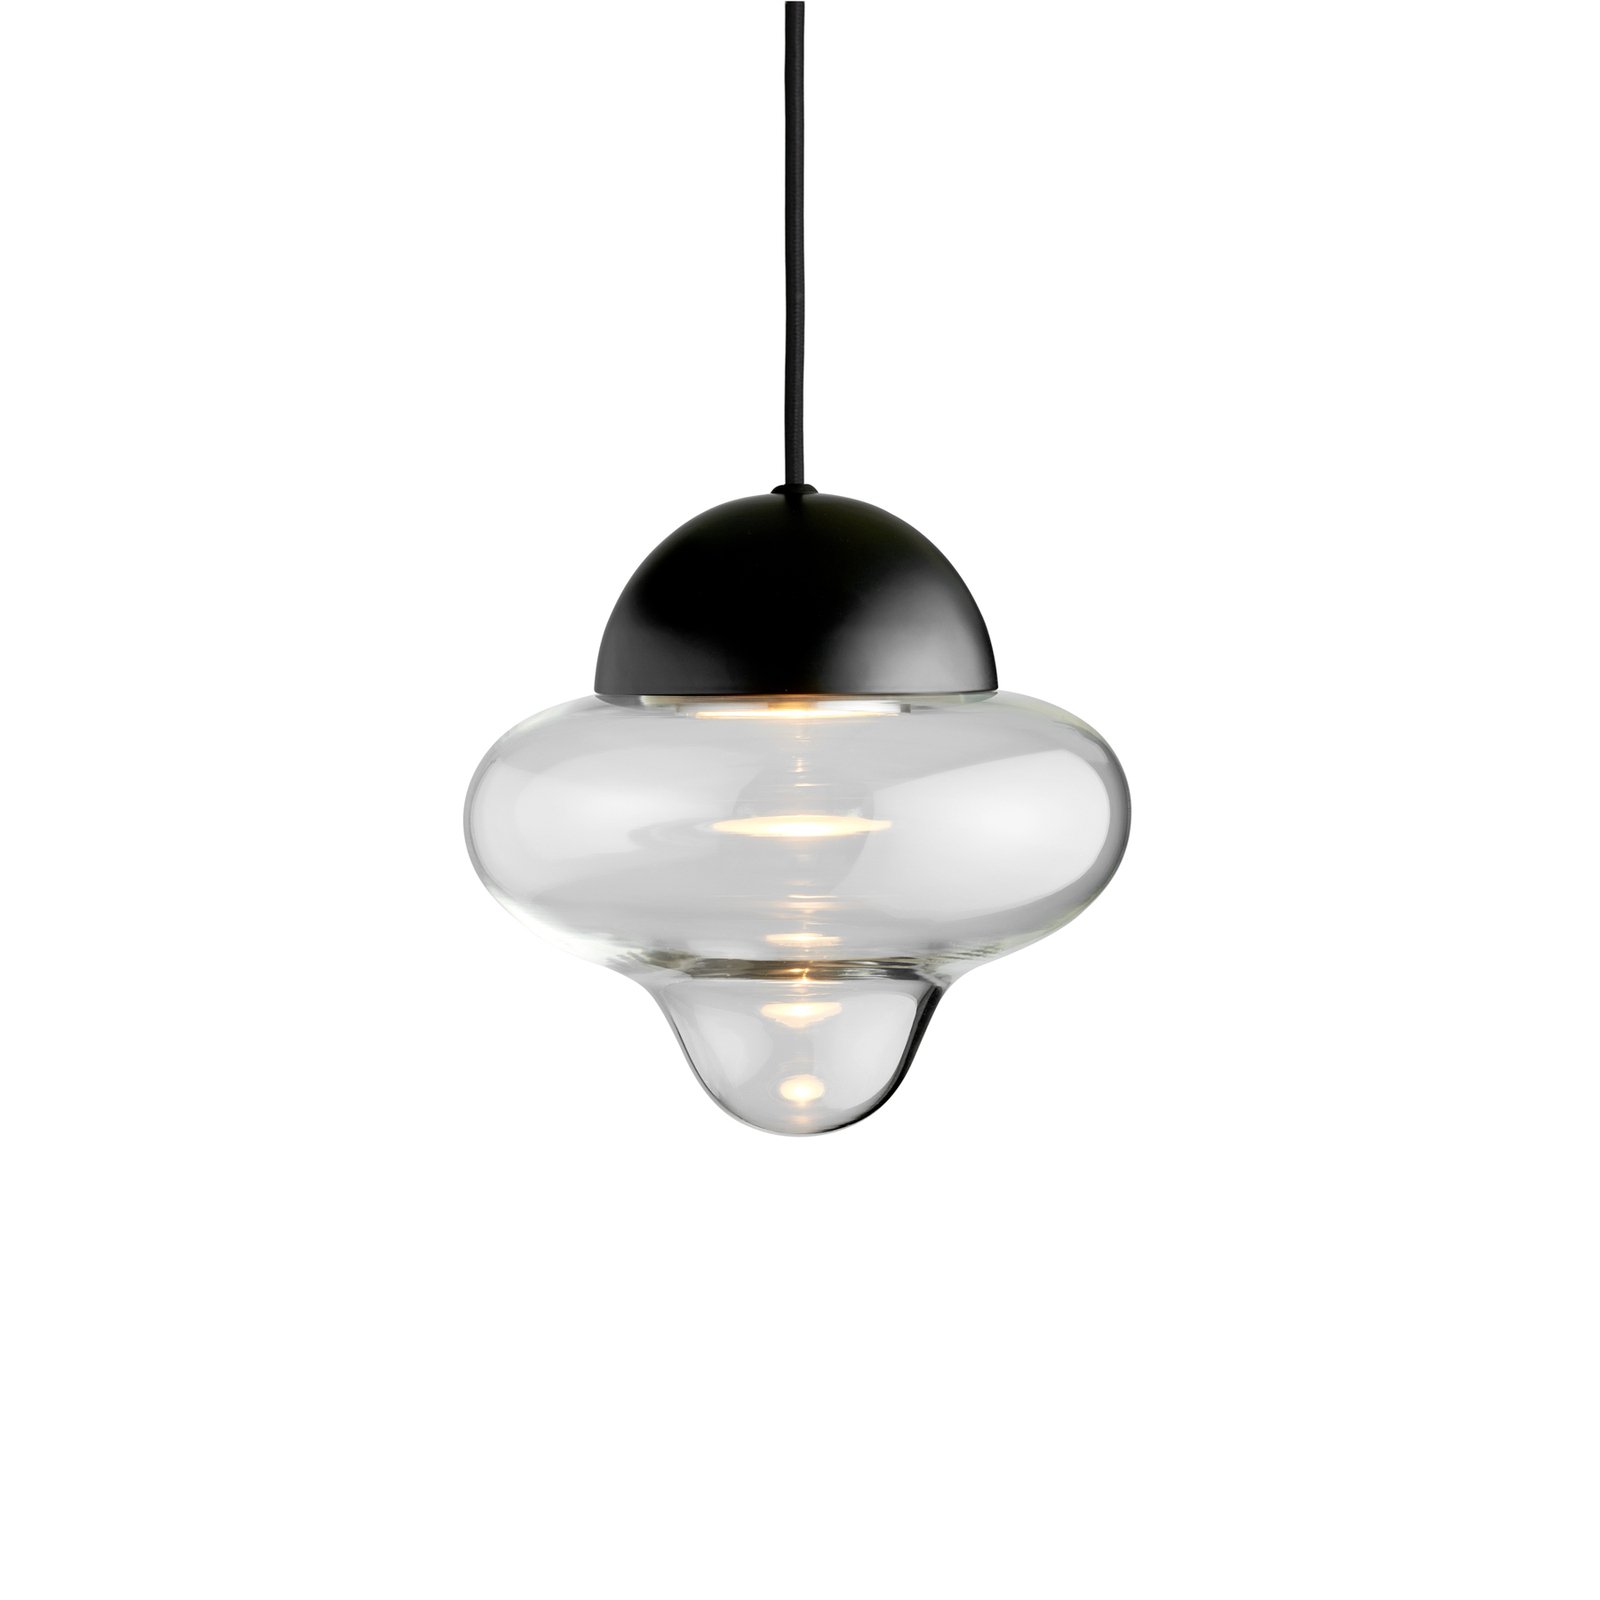 LED pendant light Nutty, clear / black, Ø 18.5 cm, glass